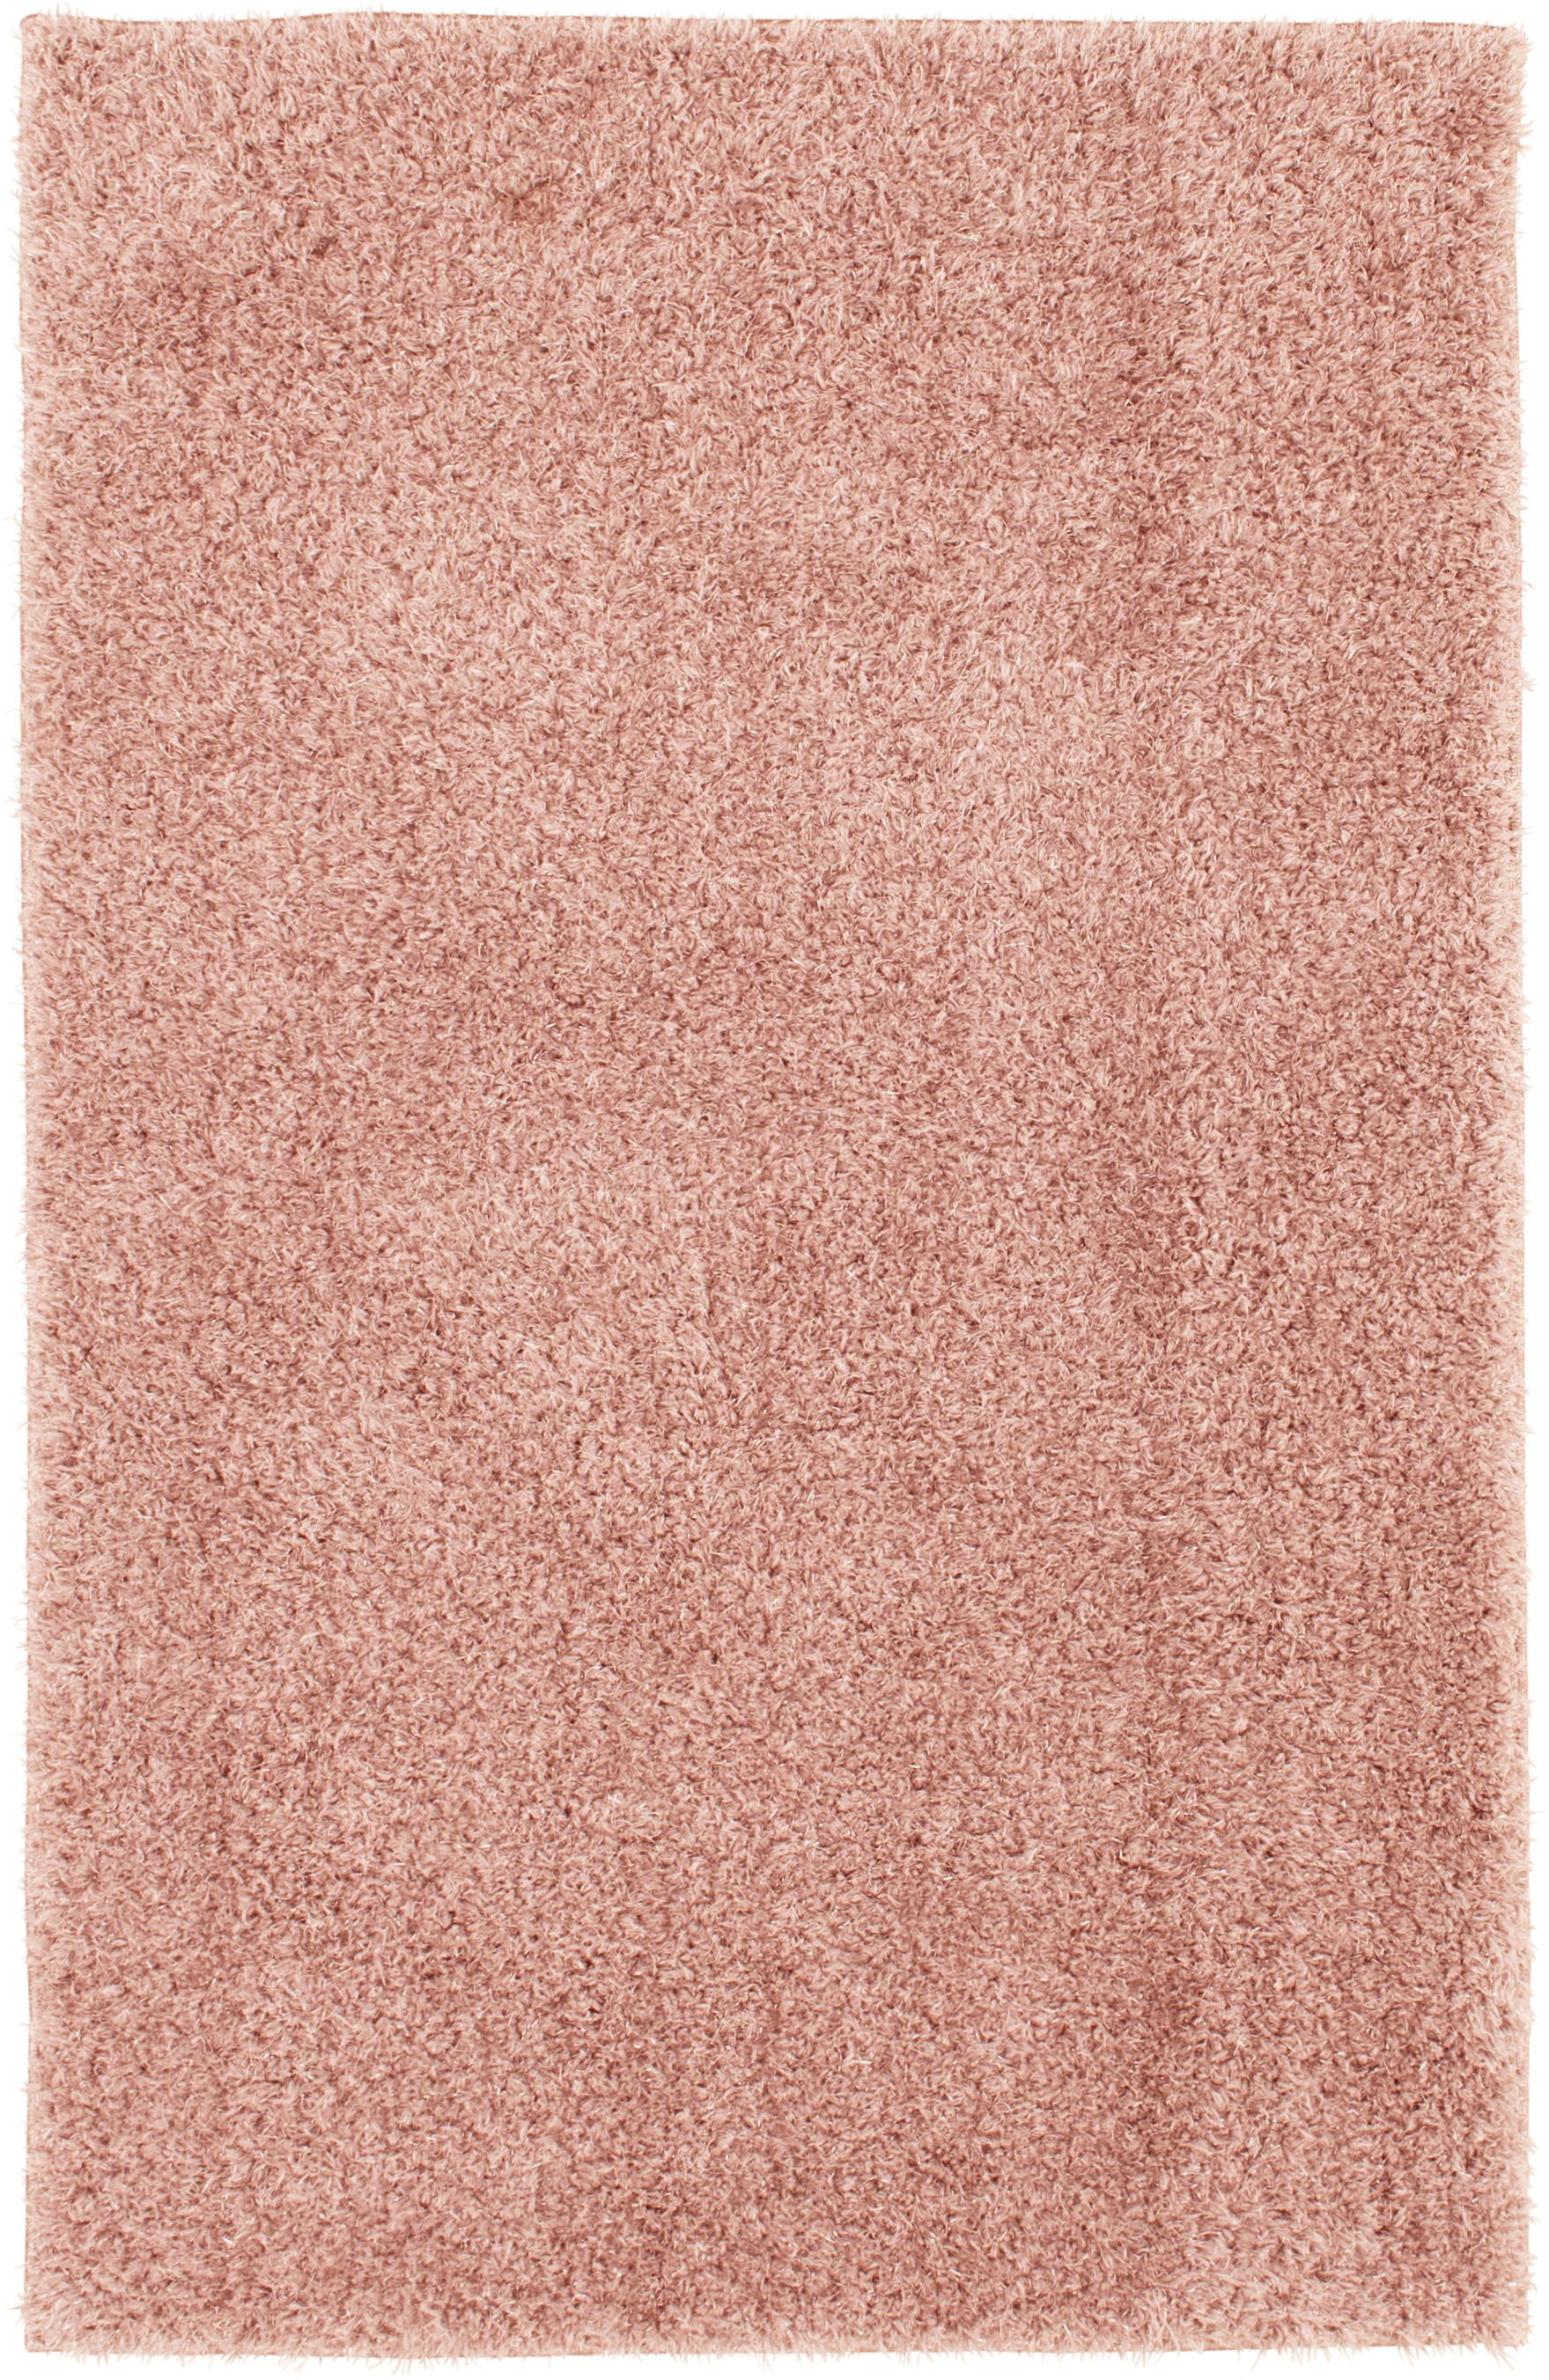 Pink Sparkly Bedroom Carpet - Carpet Vidalondon